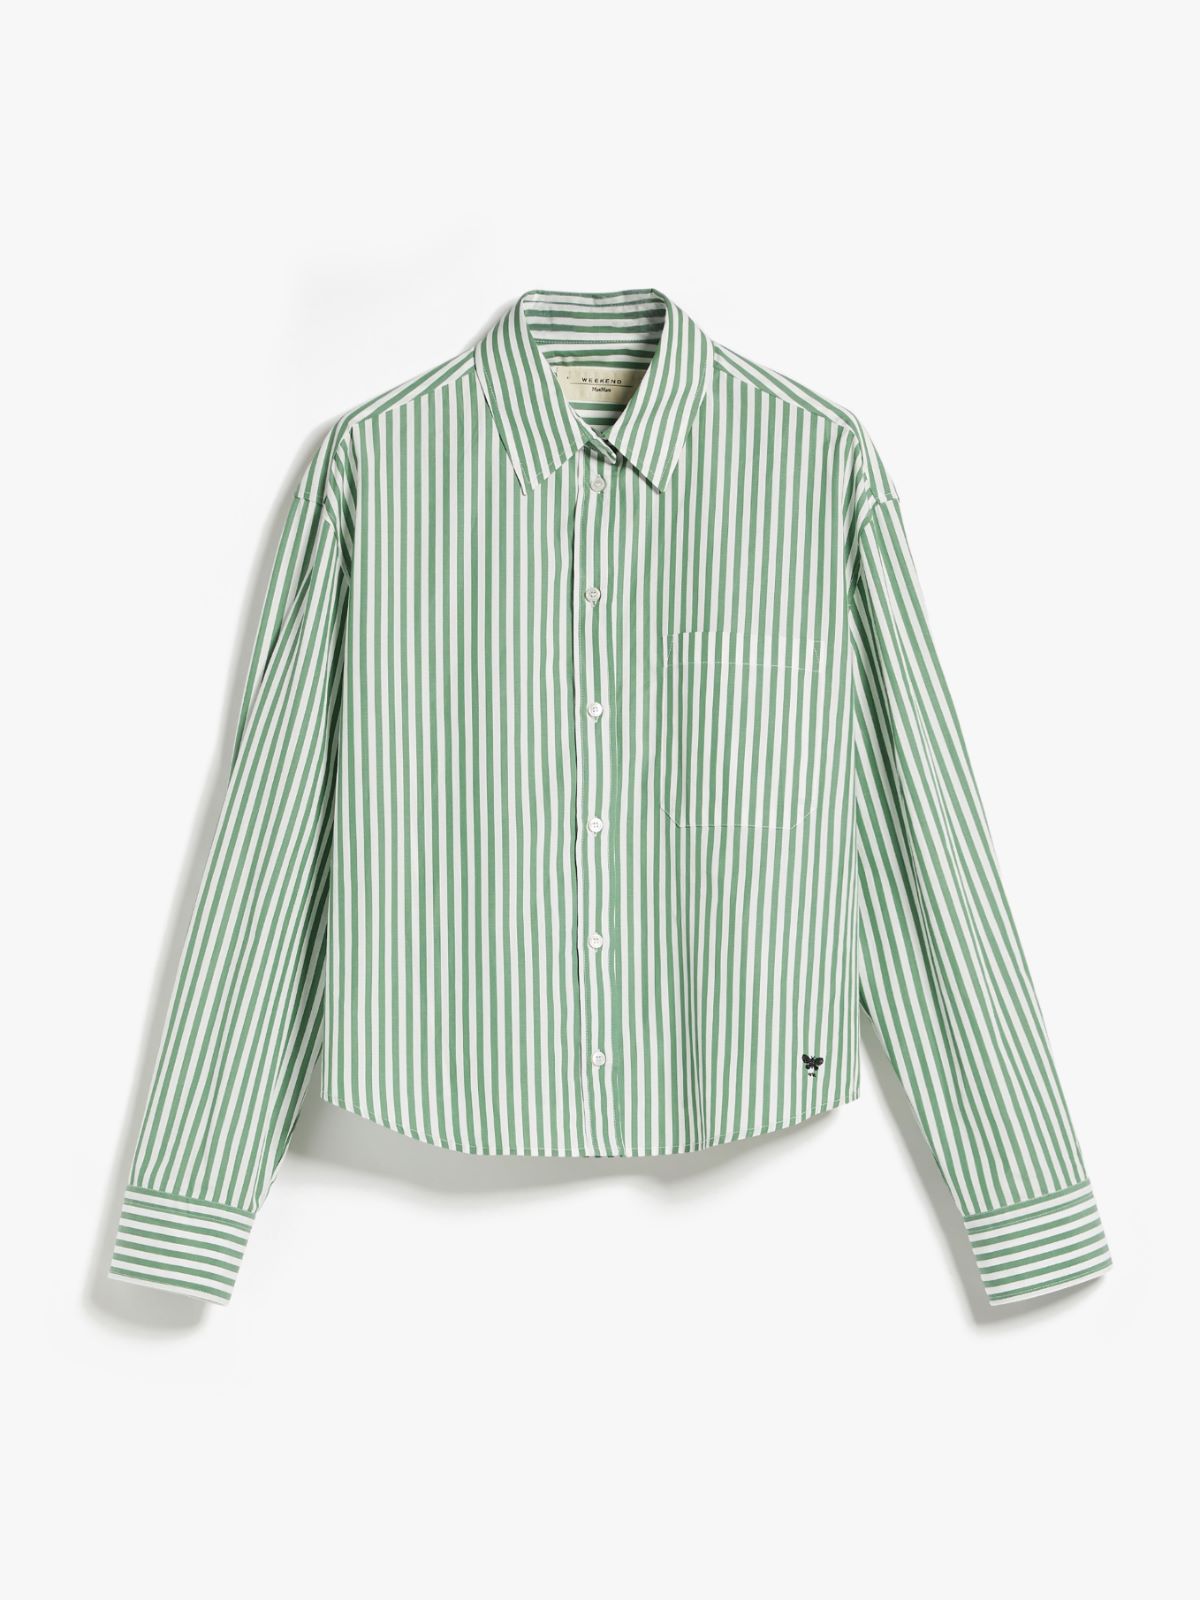 Striped cotton shirt - GREEN - Weekend Max Mara - 6